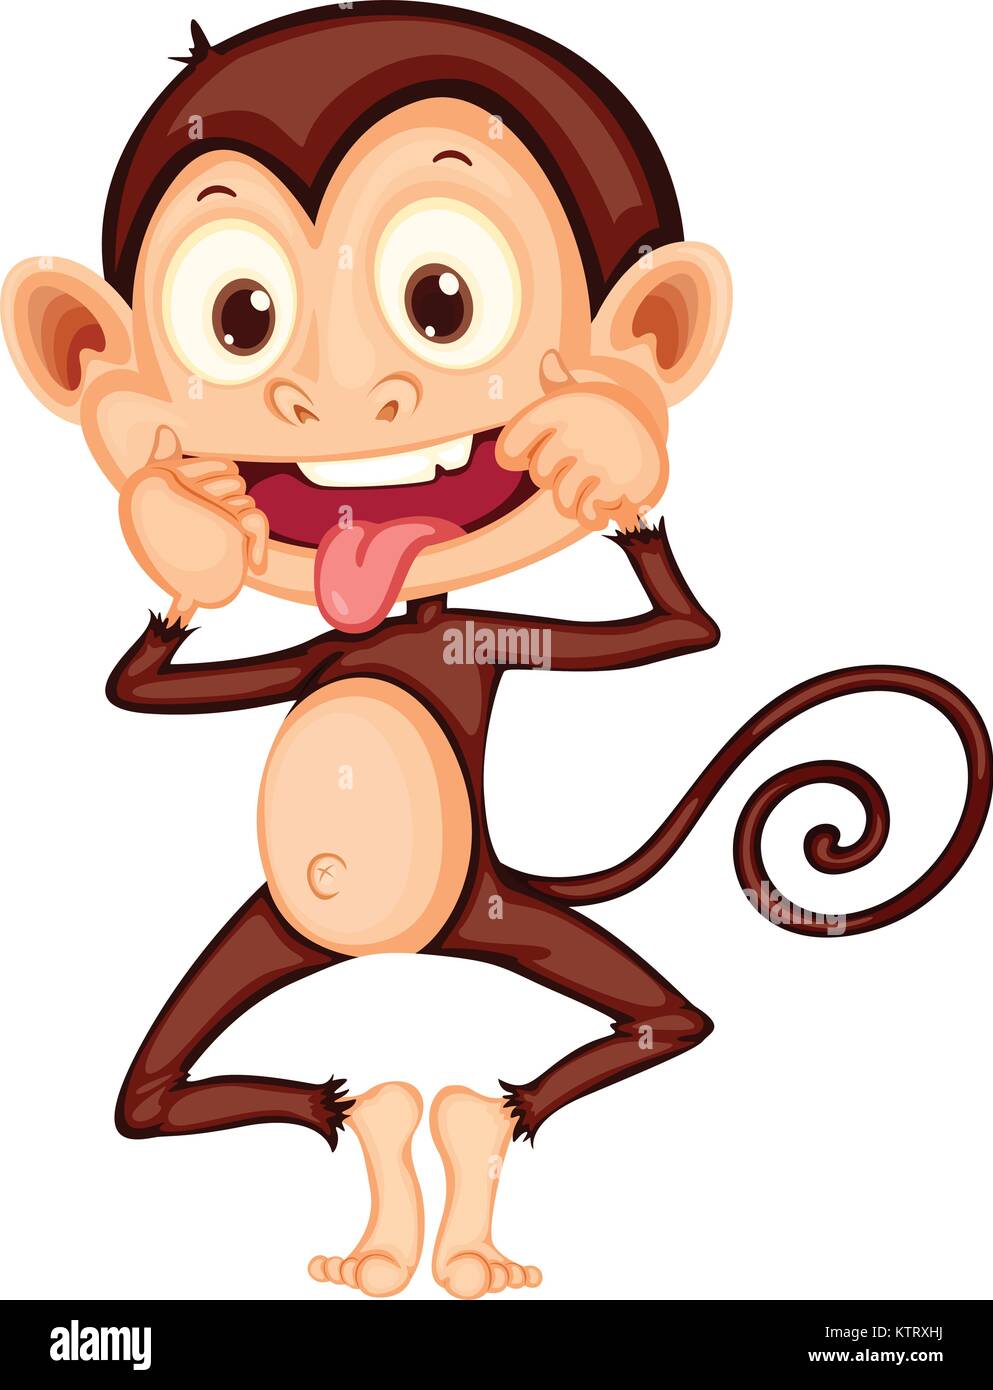 Illustration of a monkey on white Stock Vector